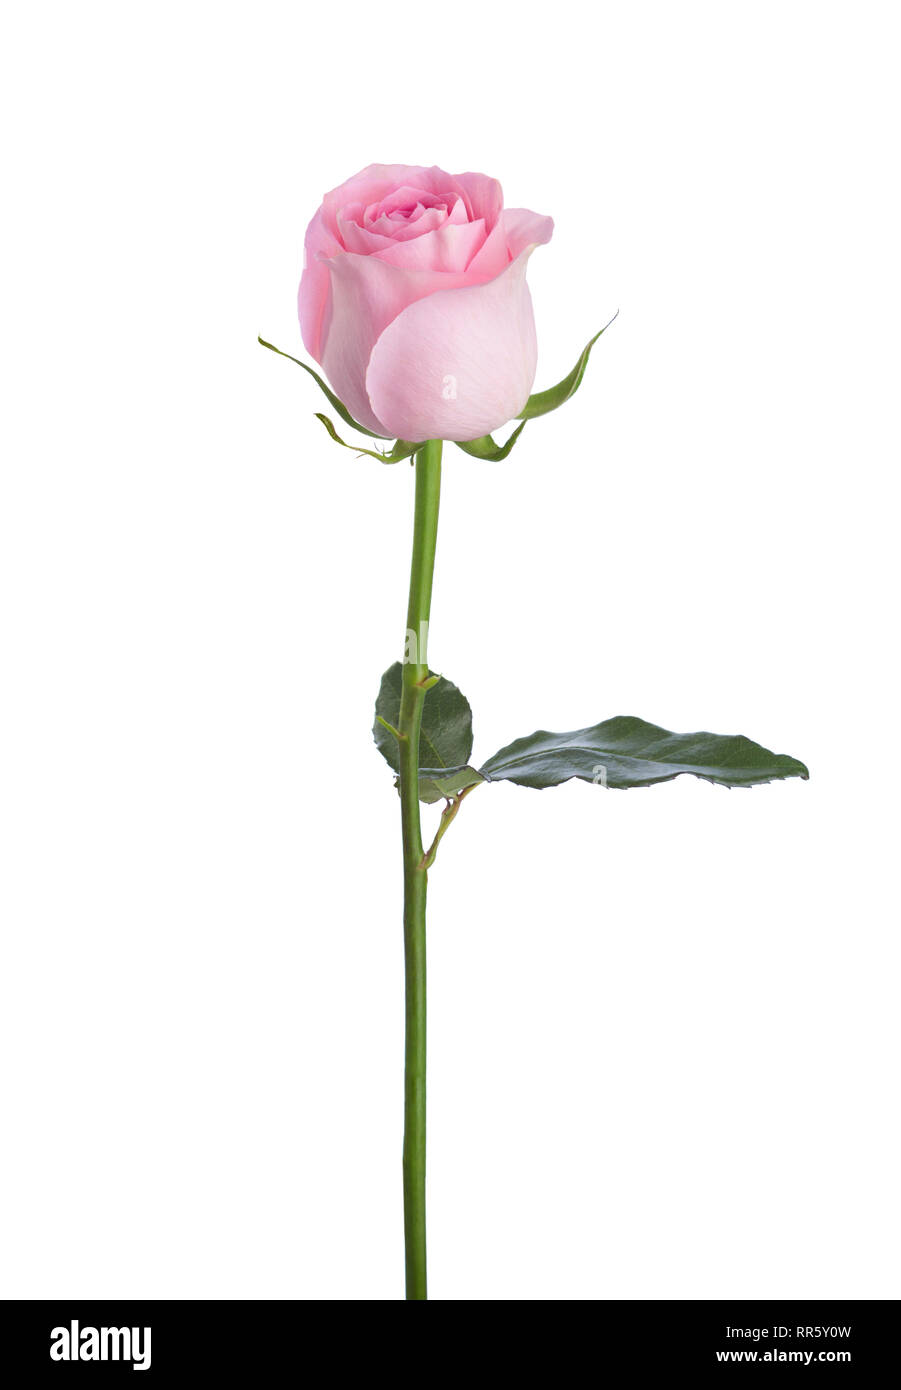 Light pink rose isolated on white background. Stock Photo